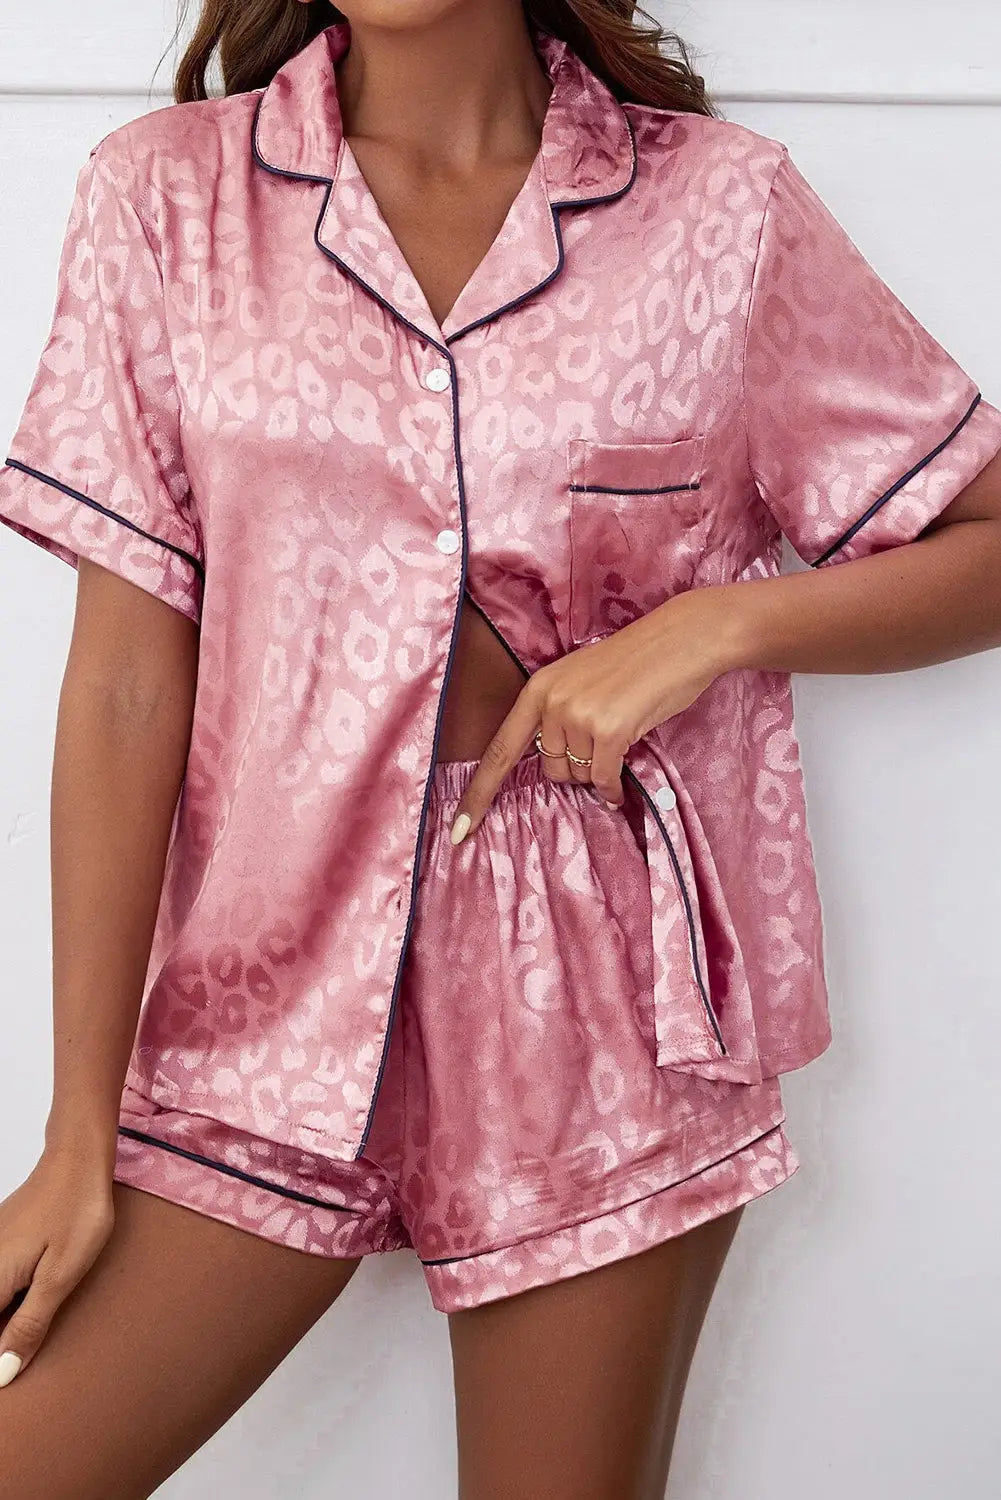 Pink leopard satin 2pcs short pajama set - s / 80% nylon + 20% spandex - loungewear & sleepwear/sleepwear